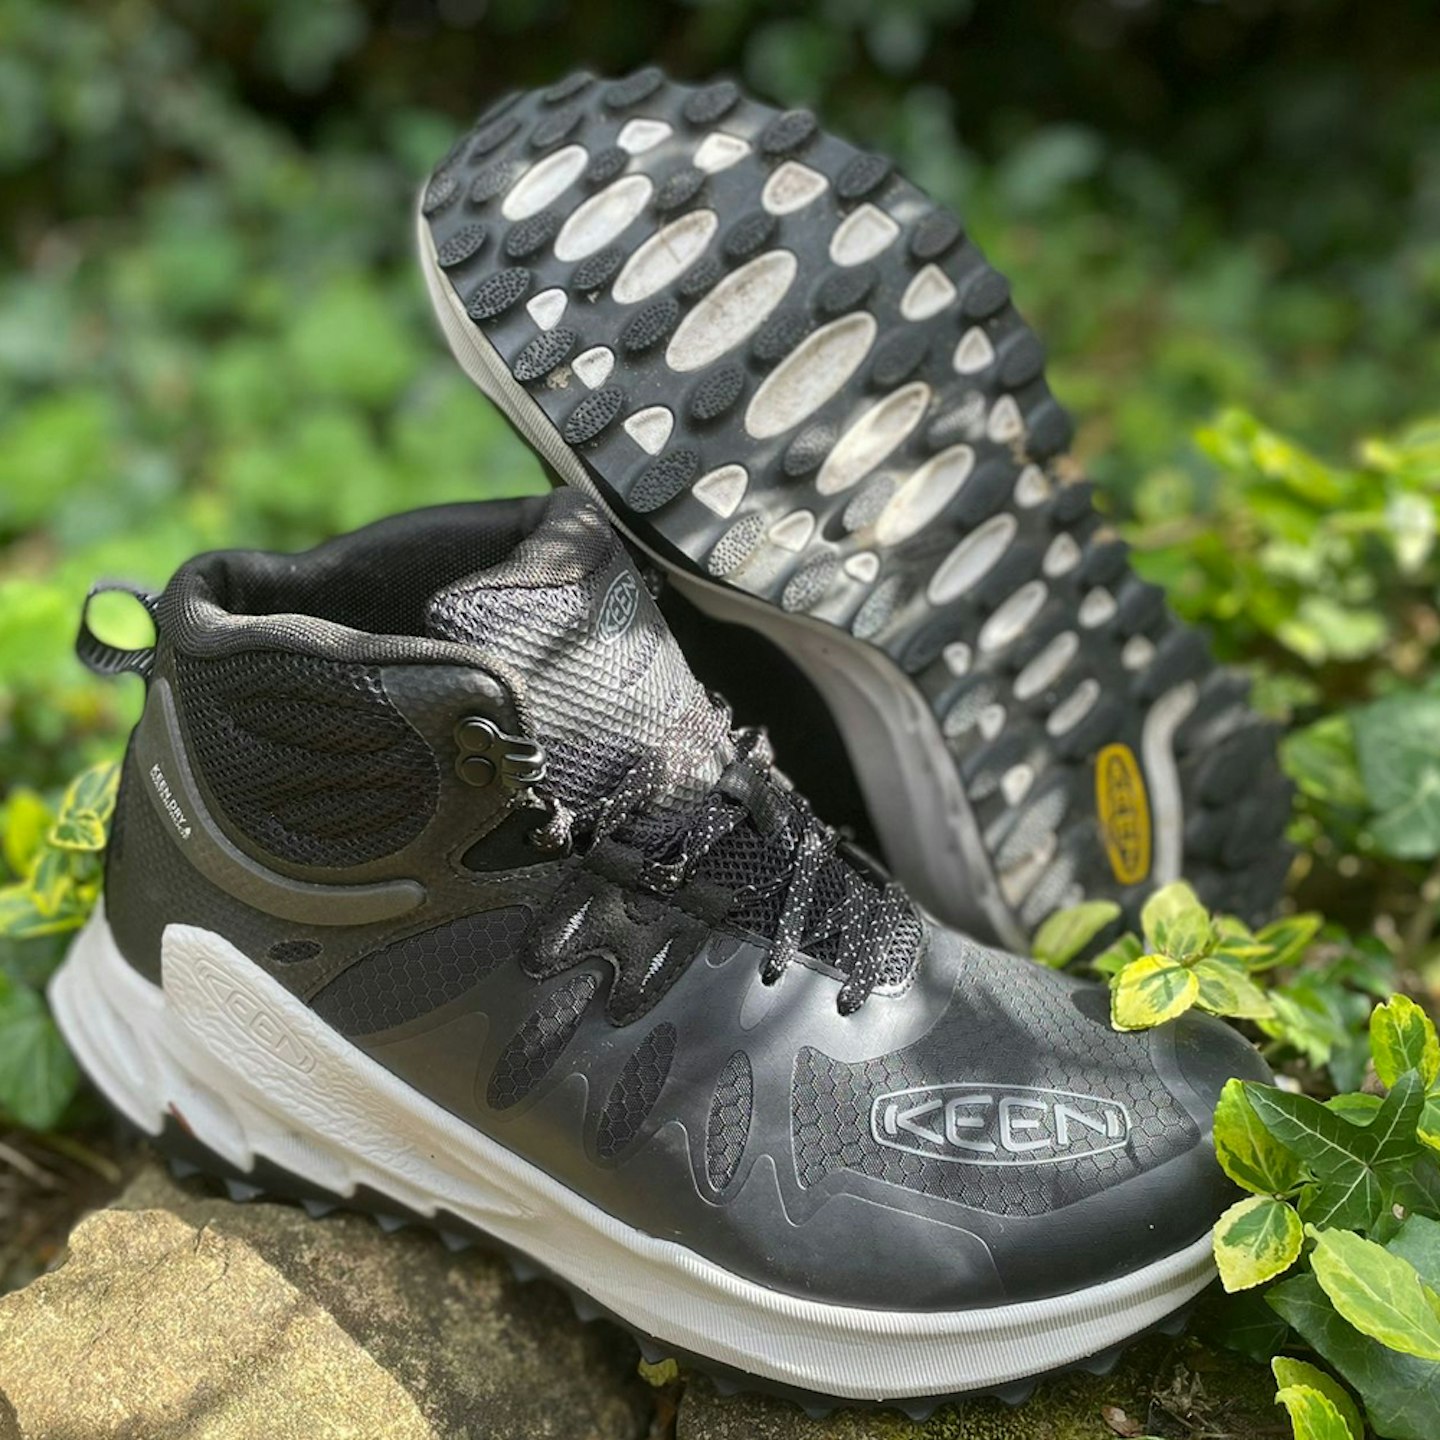 Keen zionic waterproof lightweight hiking boot